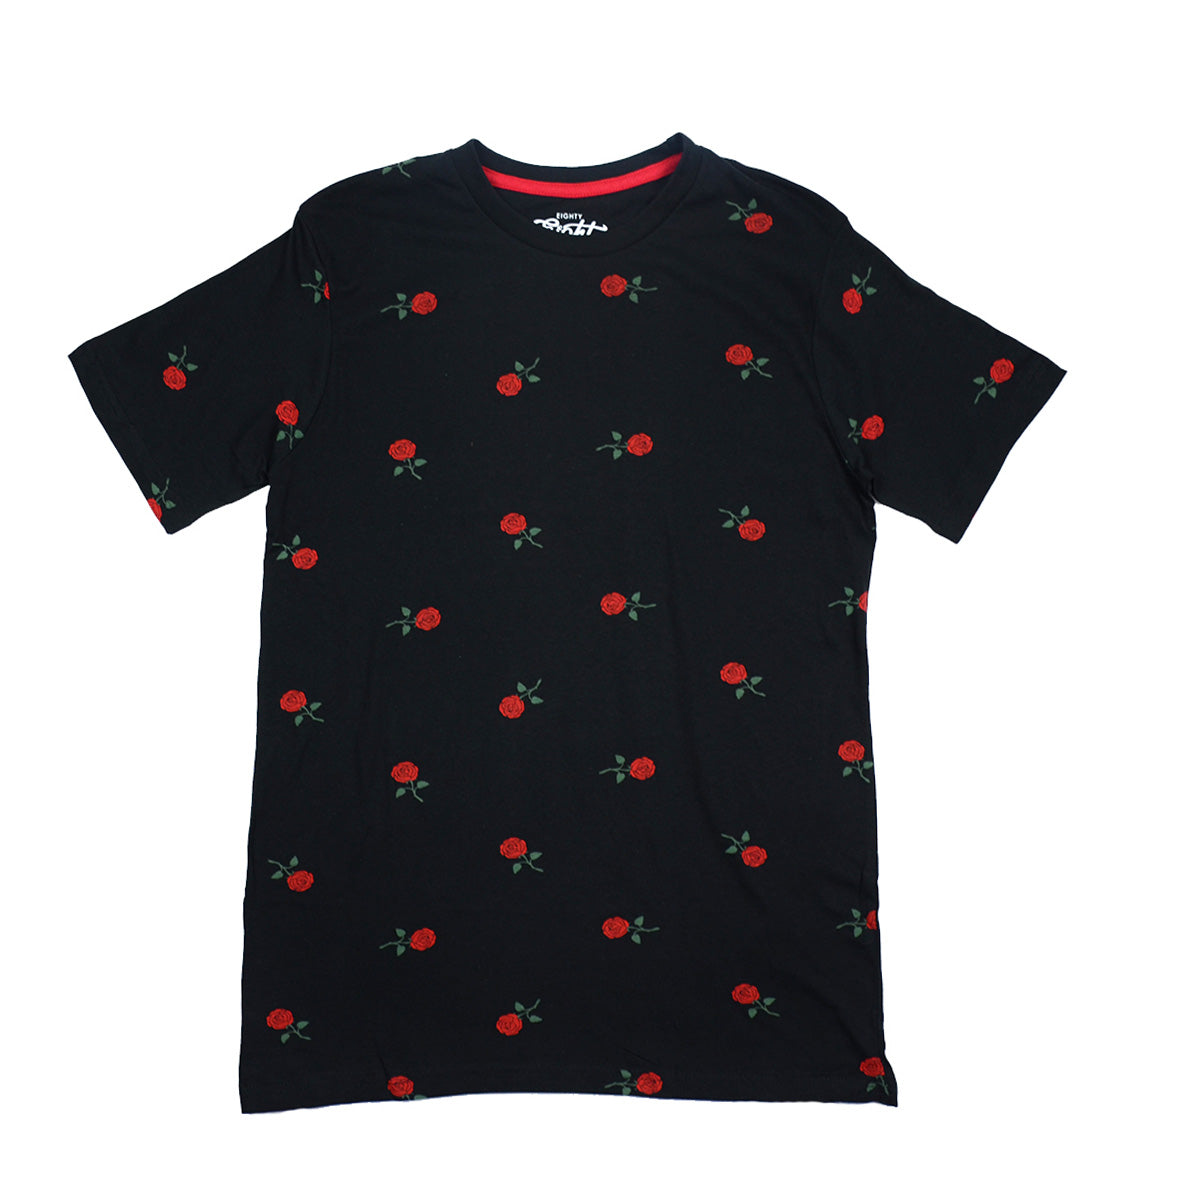 Rose 100% Cotton Black T-Shirt, Pack of 6 Units 1S, 2M, 2L, 1XL